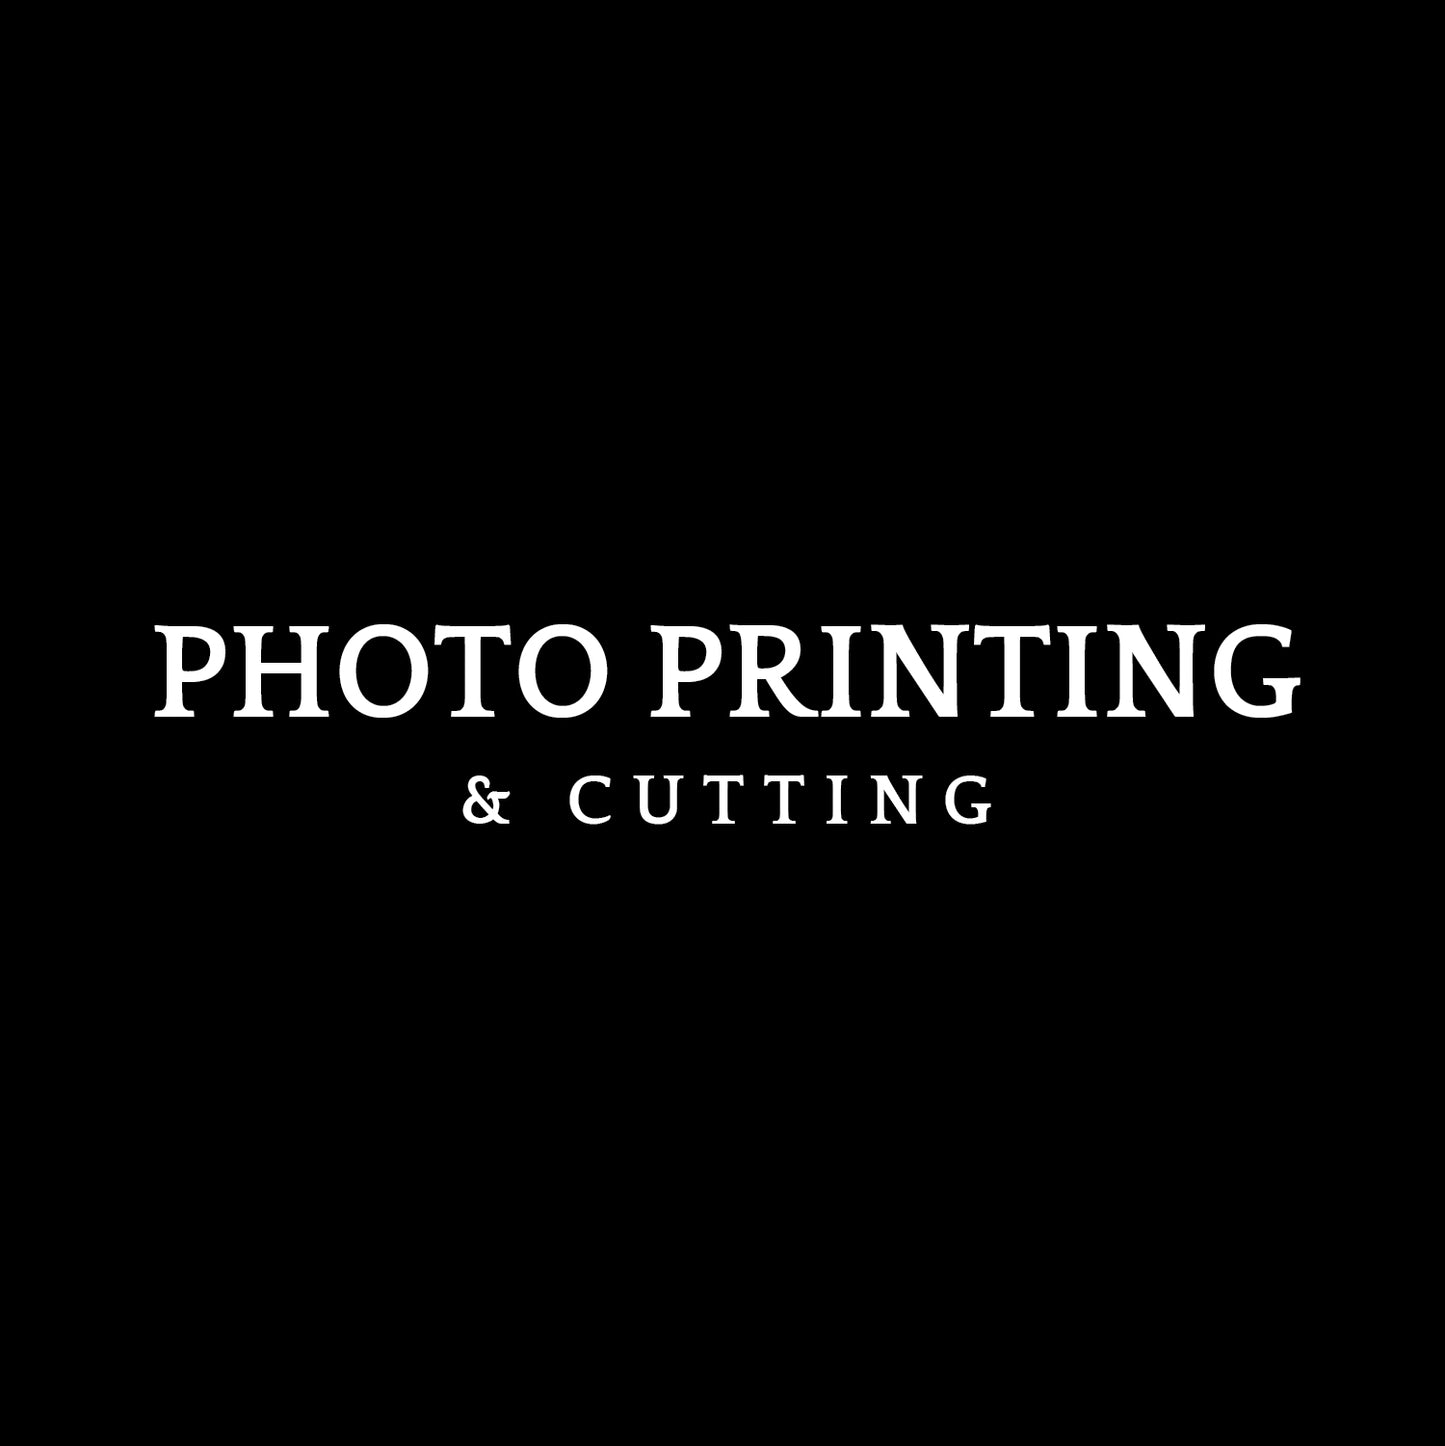 print + cut photos to custom size